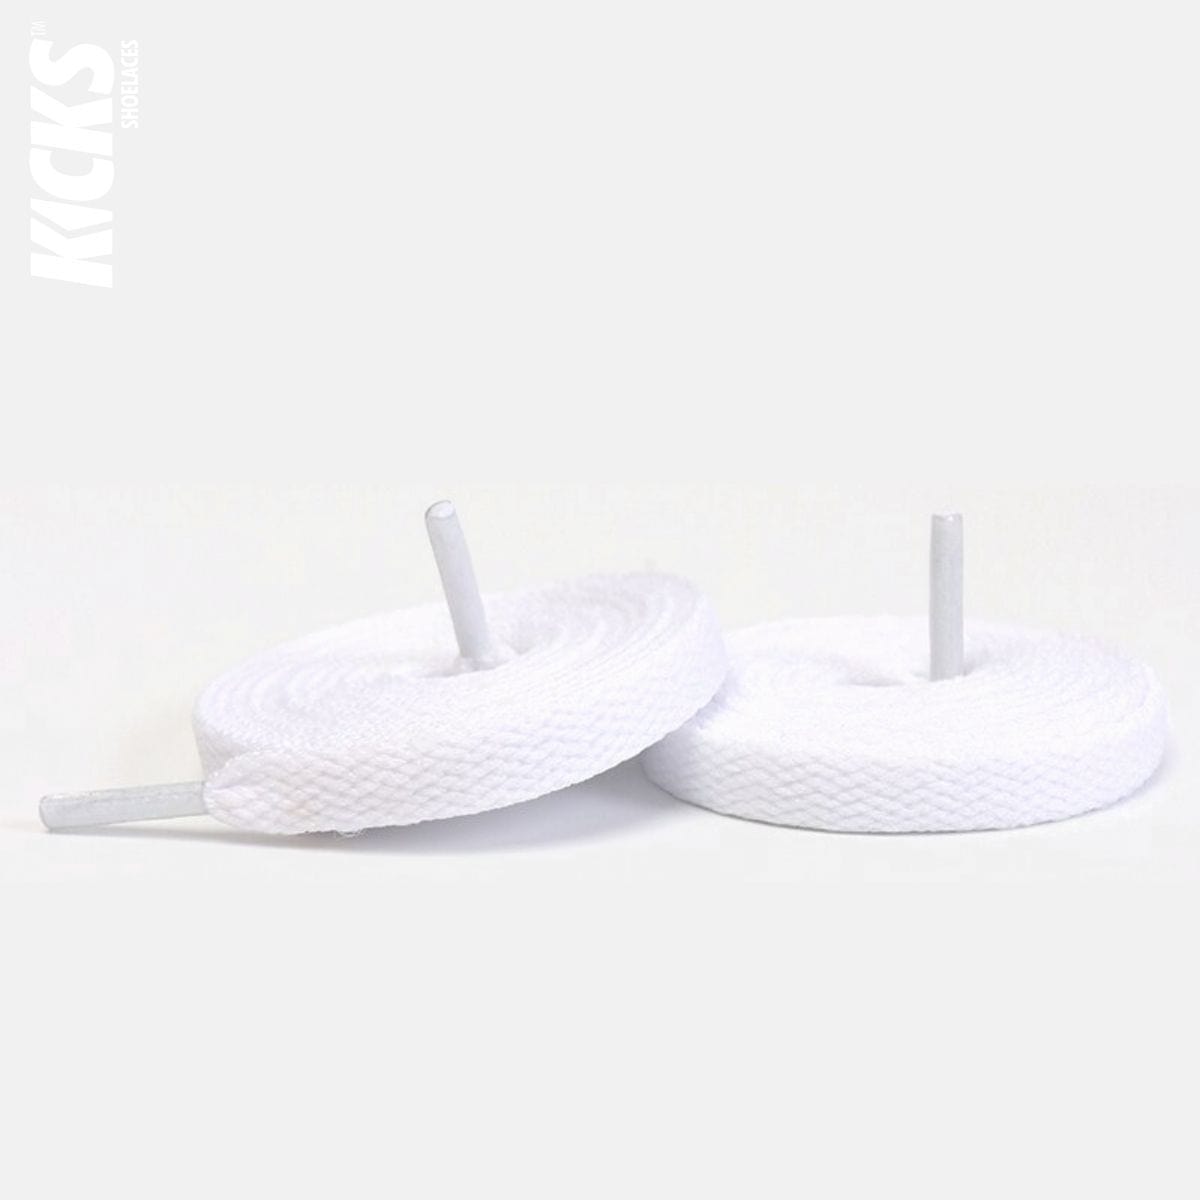 Nike Air Max 1 Replacement Shoelaces - Kicks Shoelaces